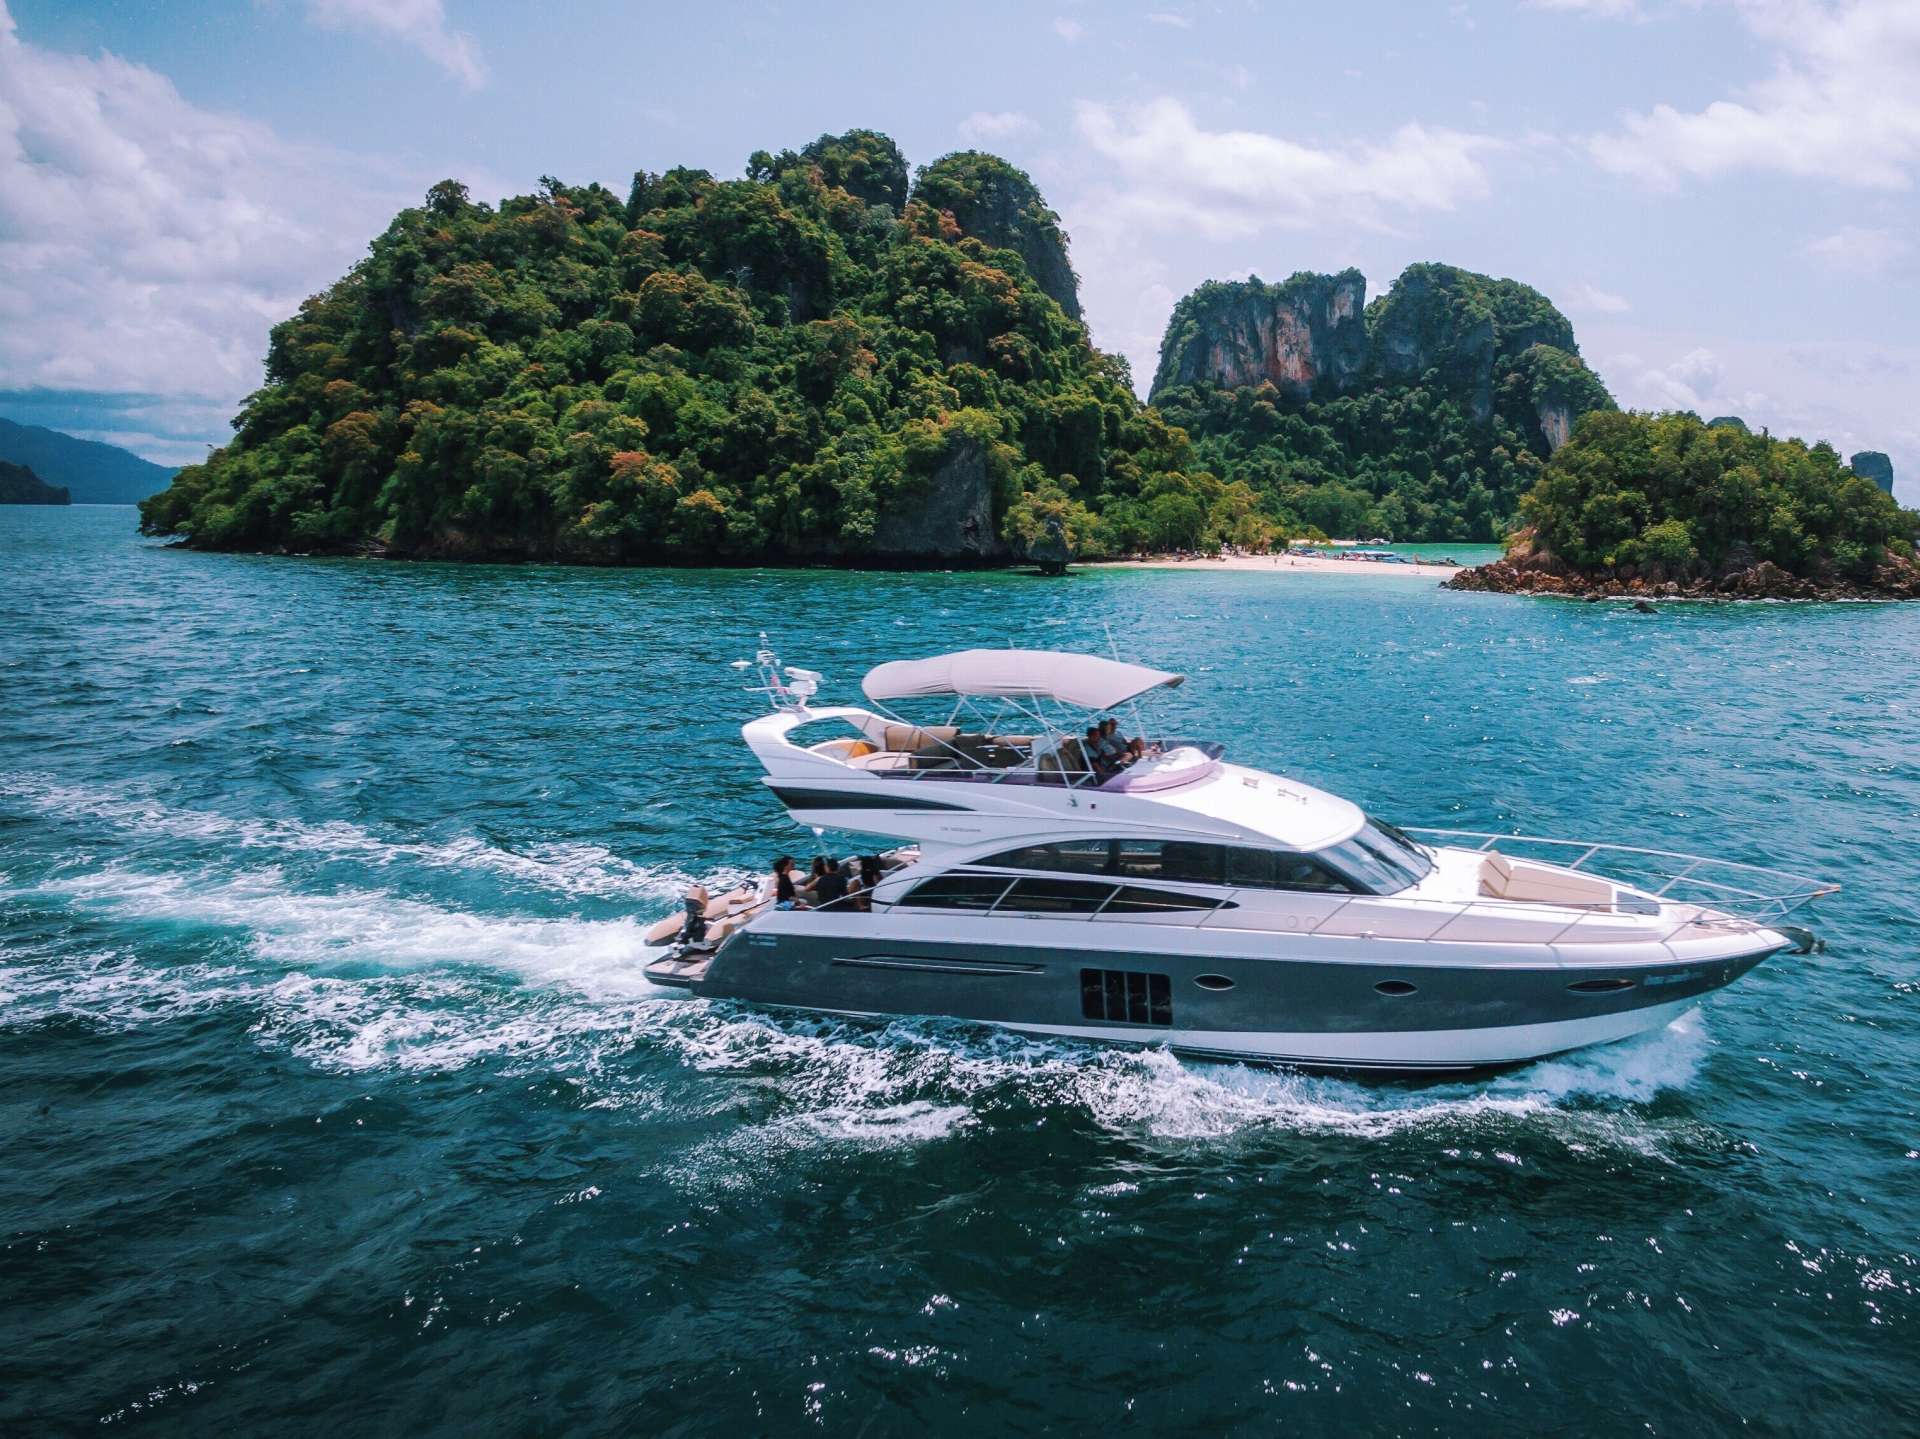 mayavee - Yacht Charter Koh Samui & Boat hire in SE Asia 1